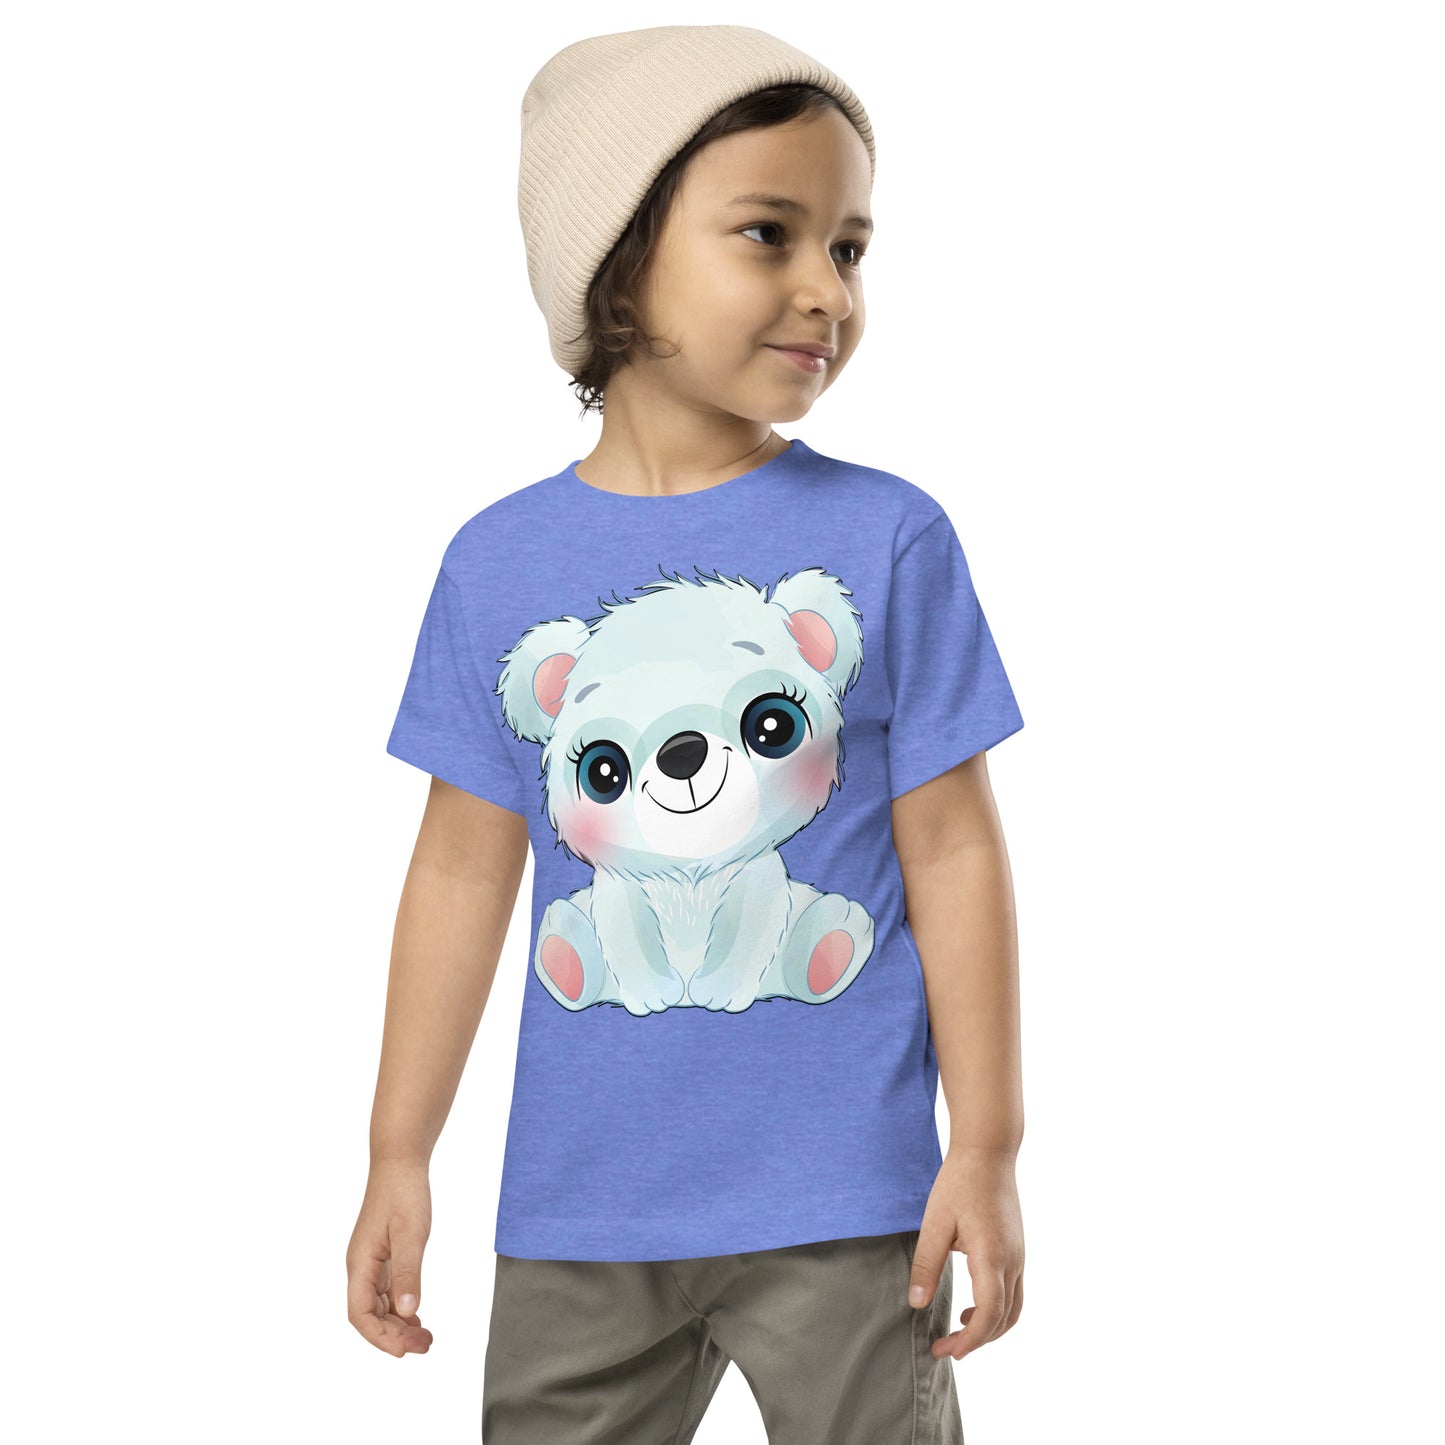 Cute Polar Dog T-shirt, No. 0219